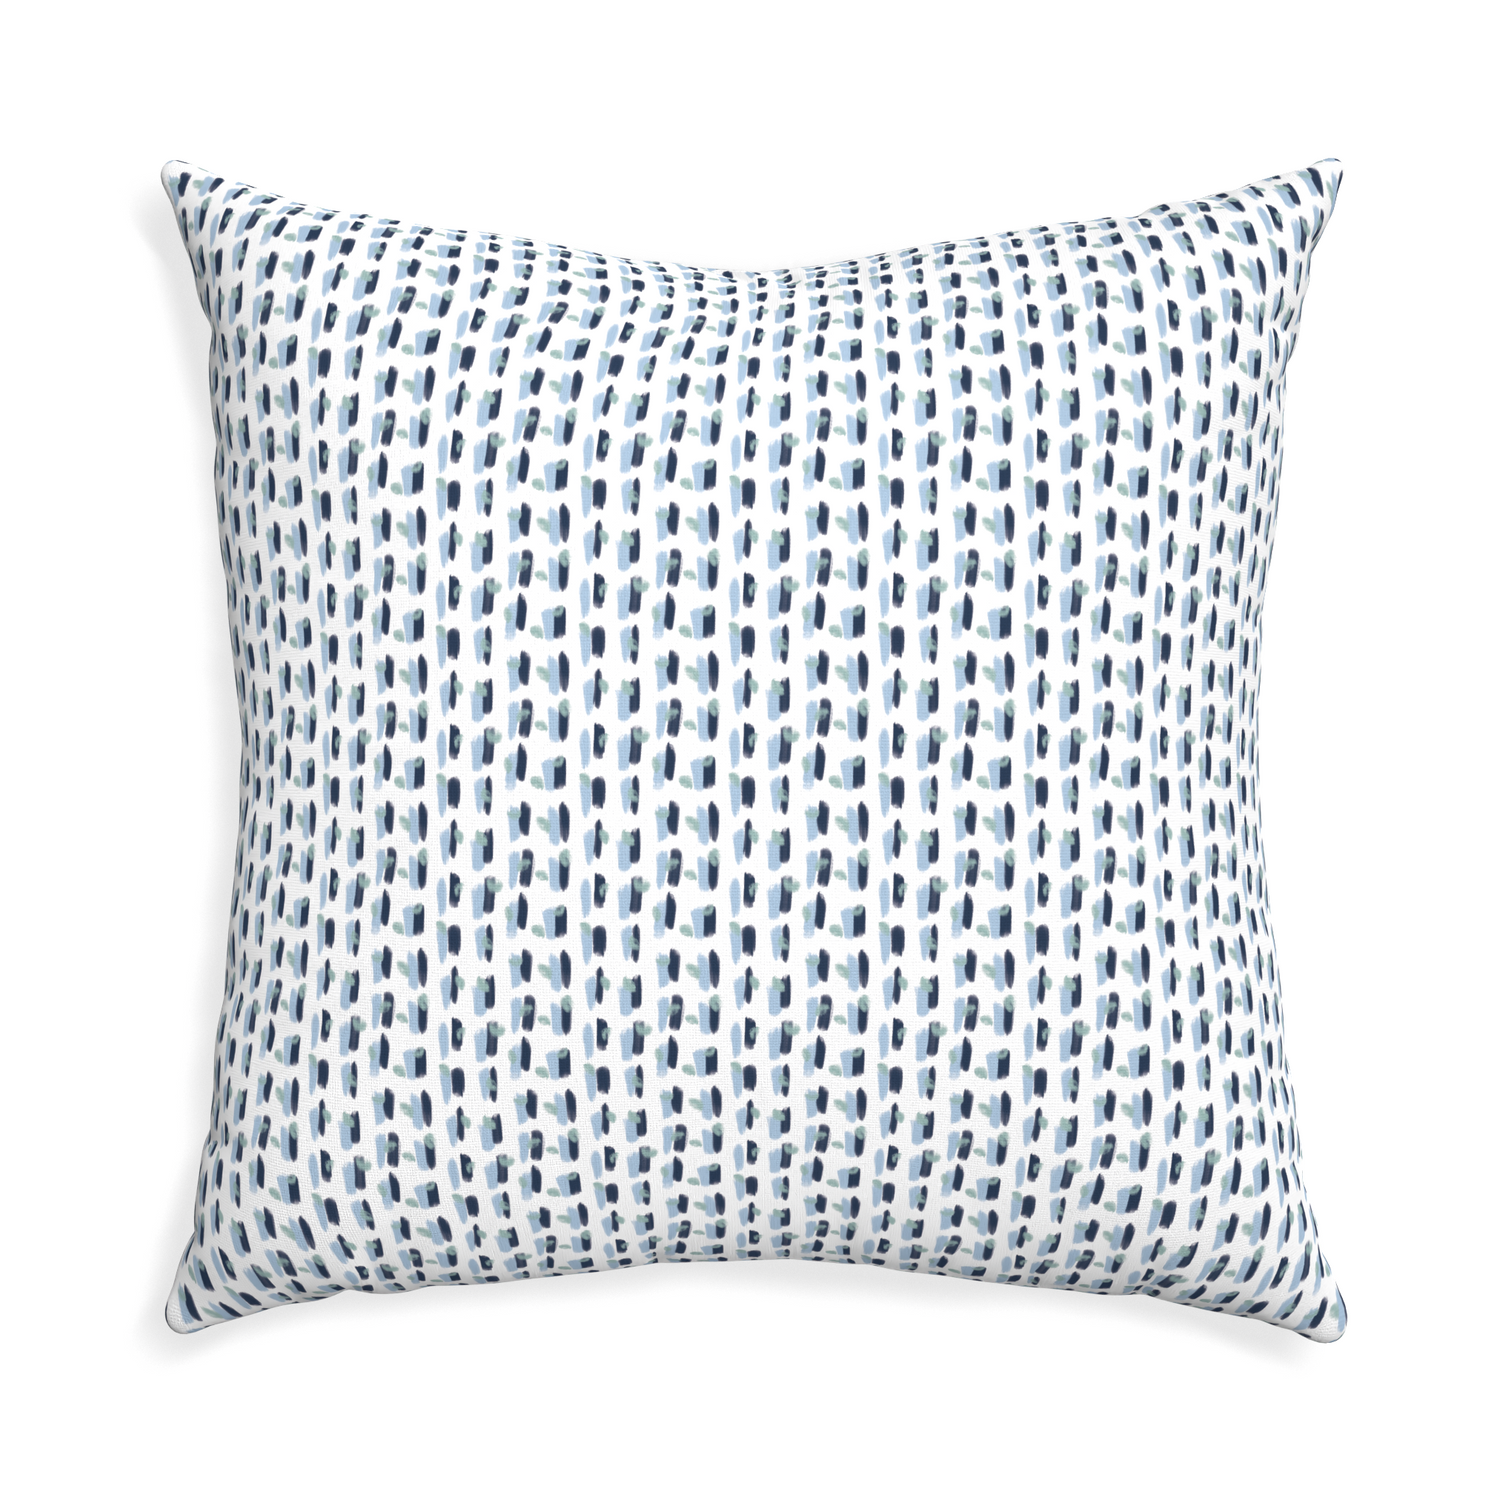 Euro-sham poppy blue custom pillow with none on white background